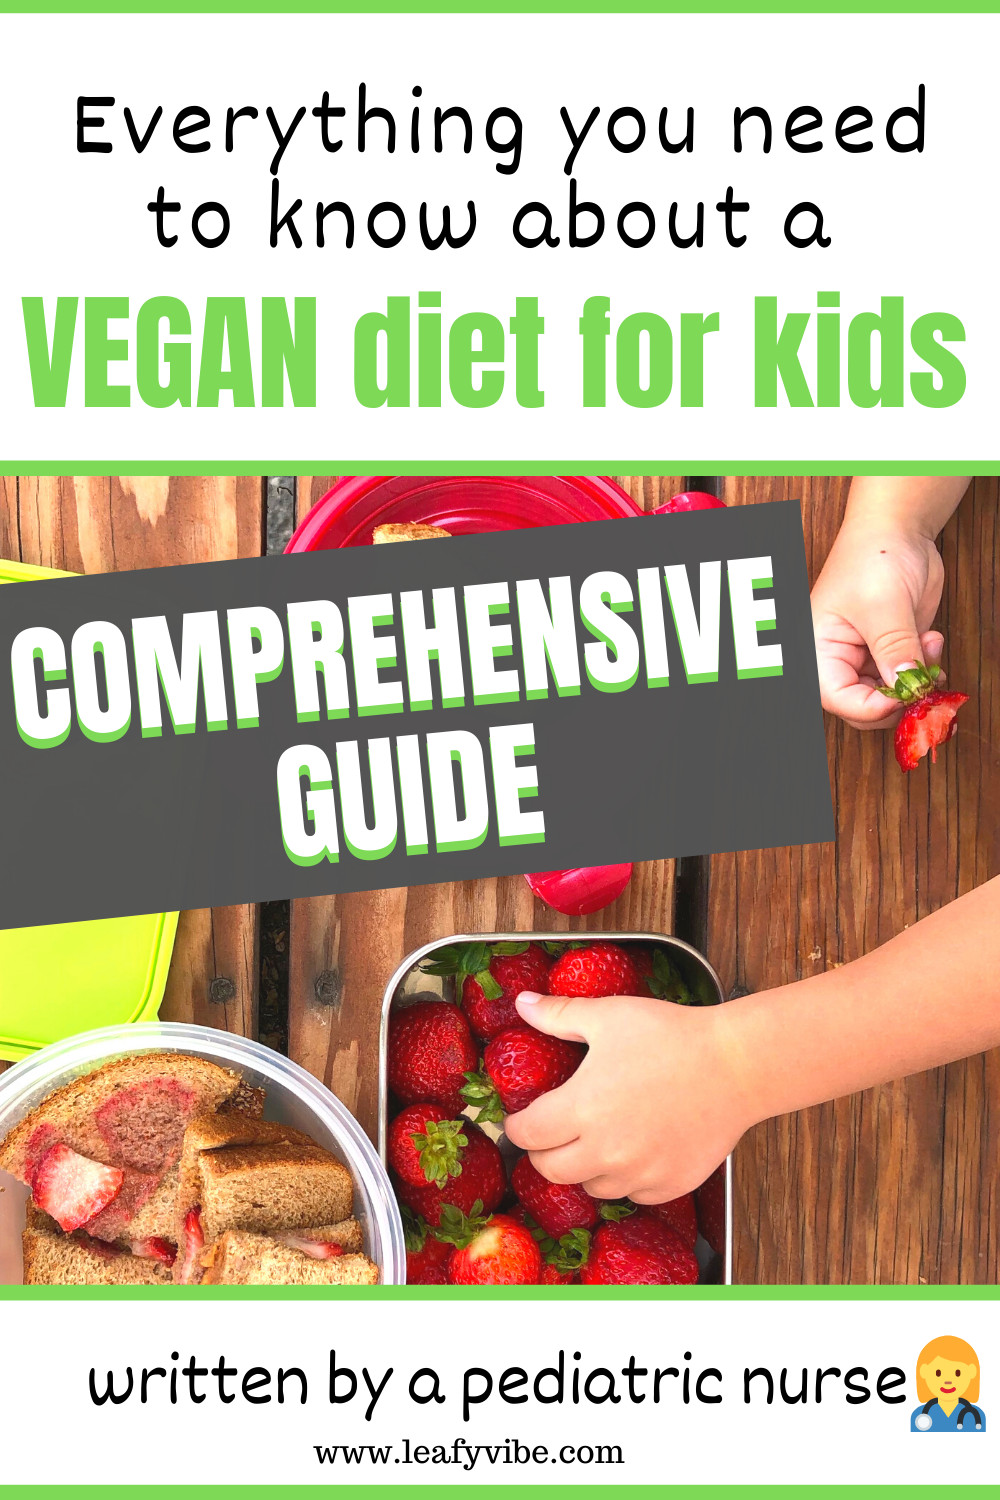 Plant Based Diet For Kids
 Is a Vegan Plant Based Diet Healthy for Children